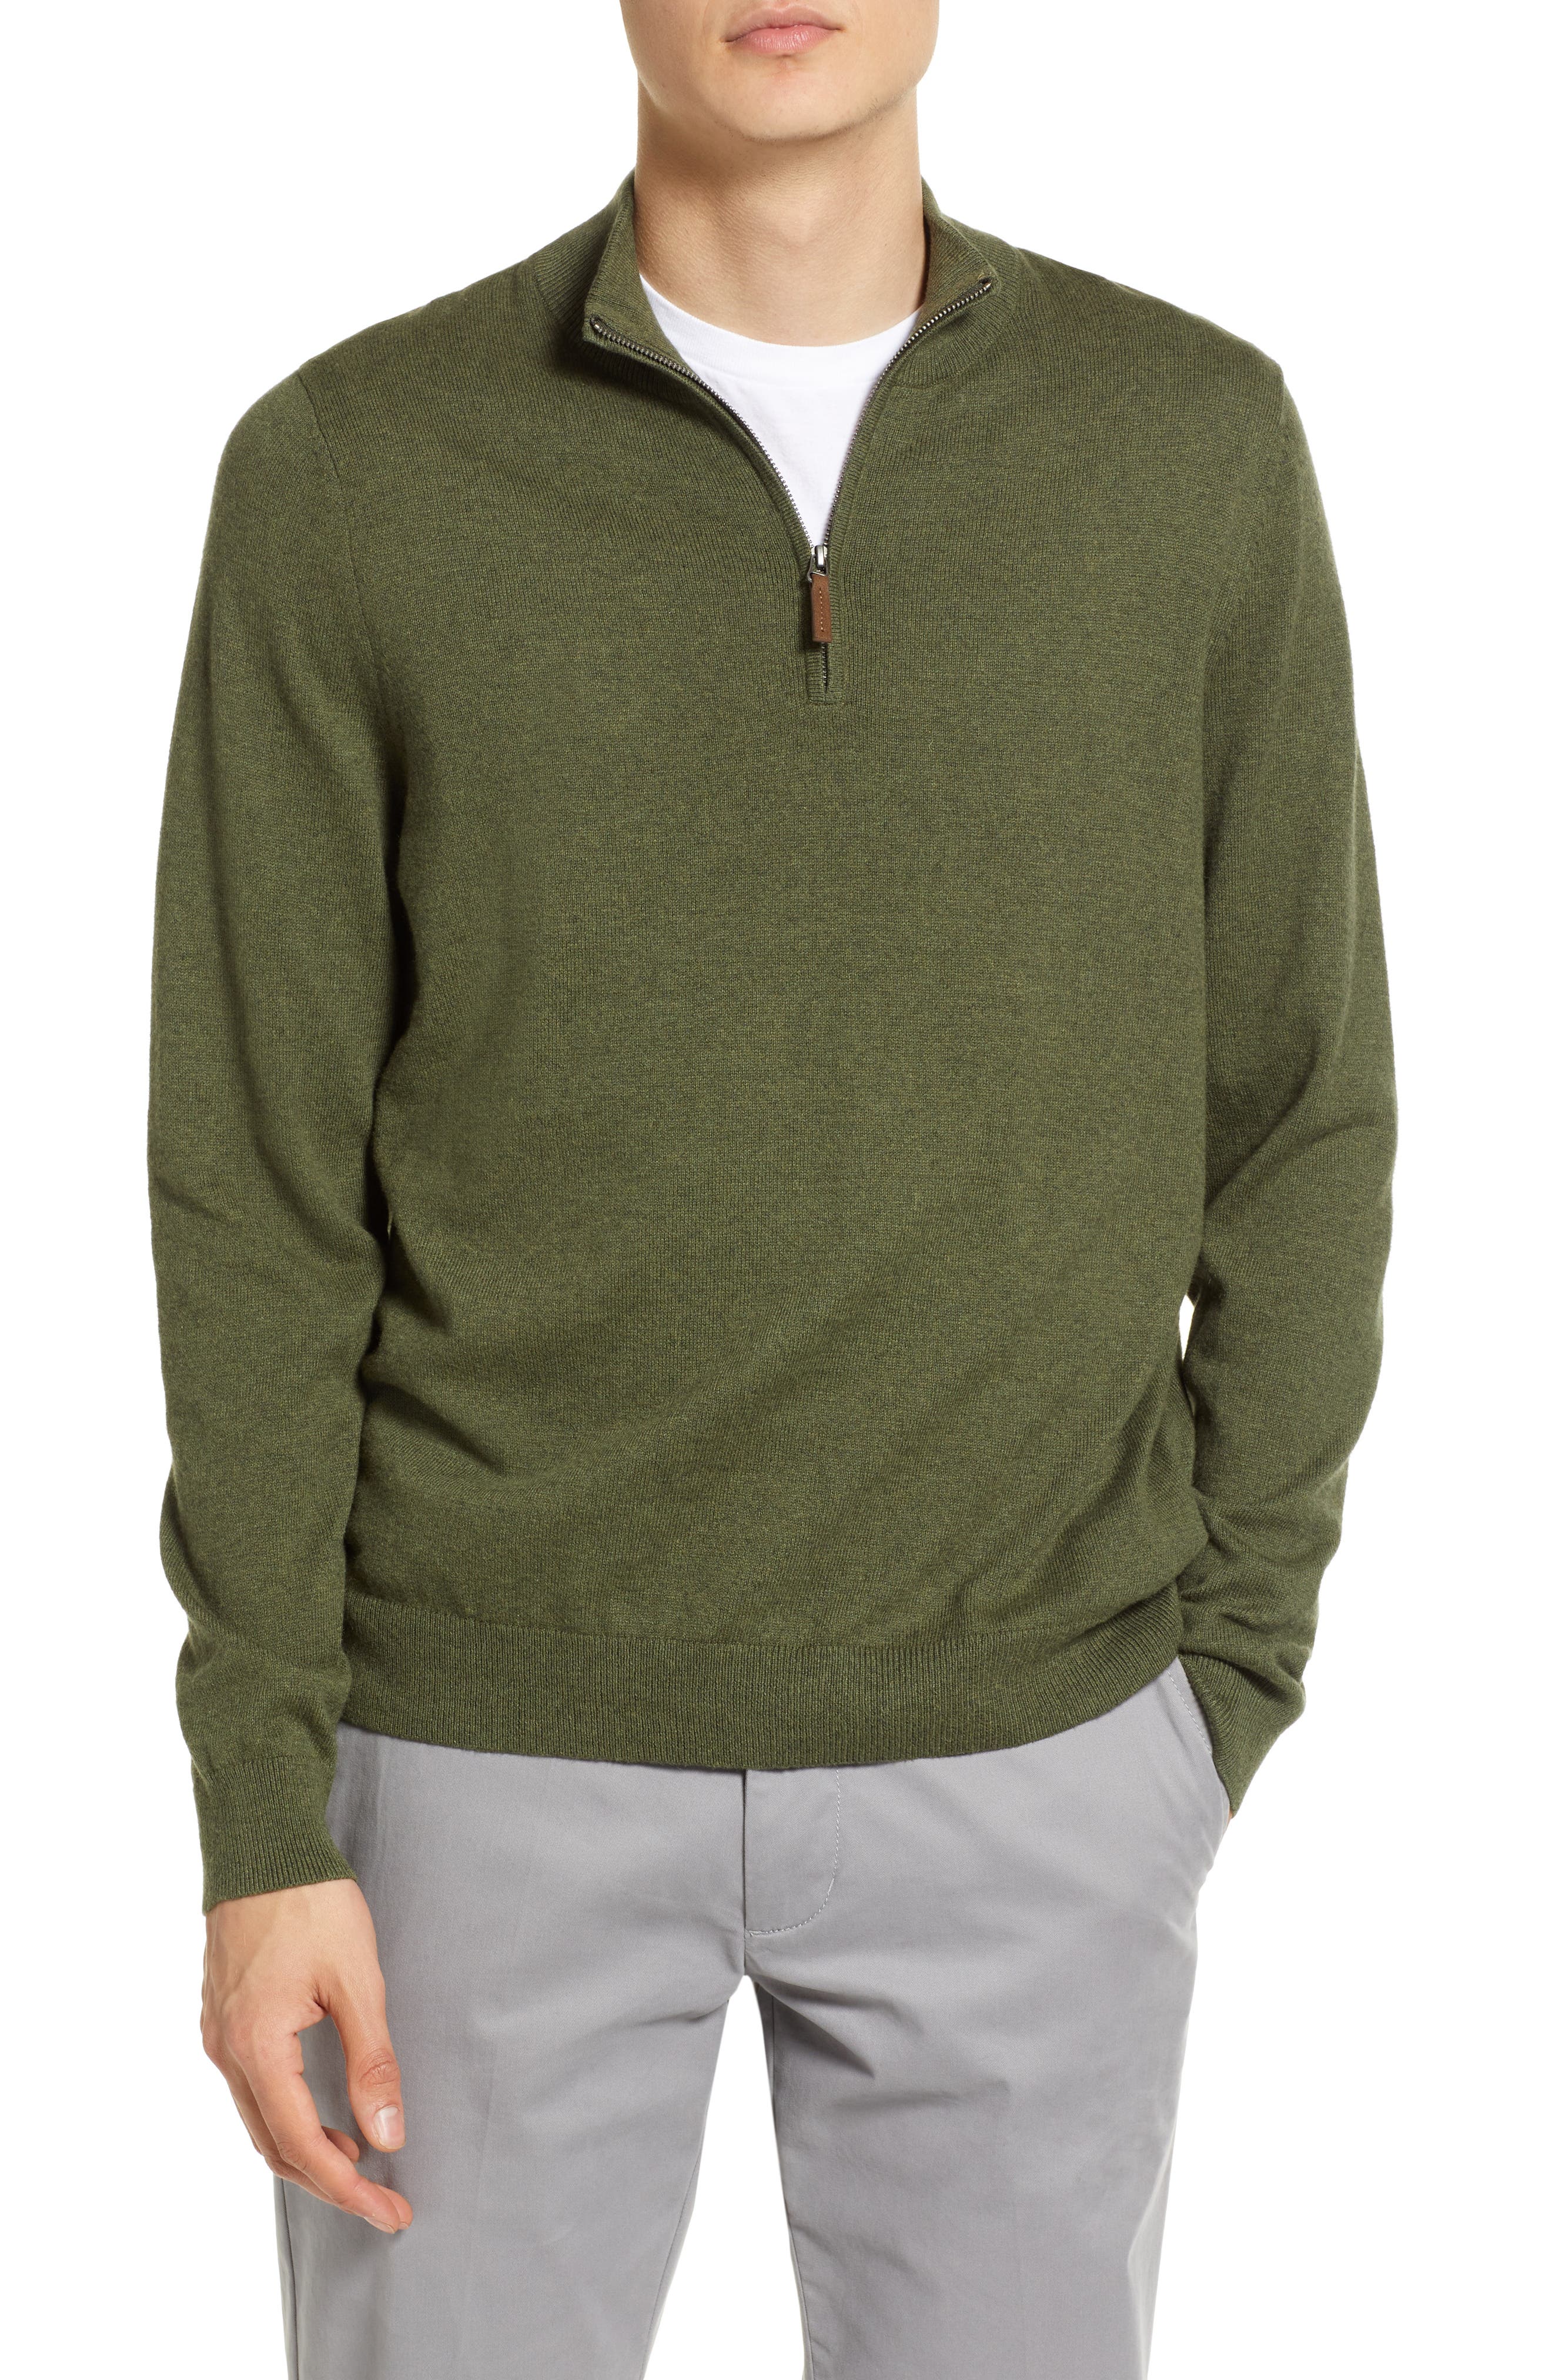 discount 96% MEN FASHION Jumpers & Sweatshirts Fleece O´neill sweatshirt Green M 